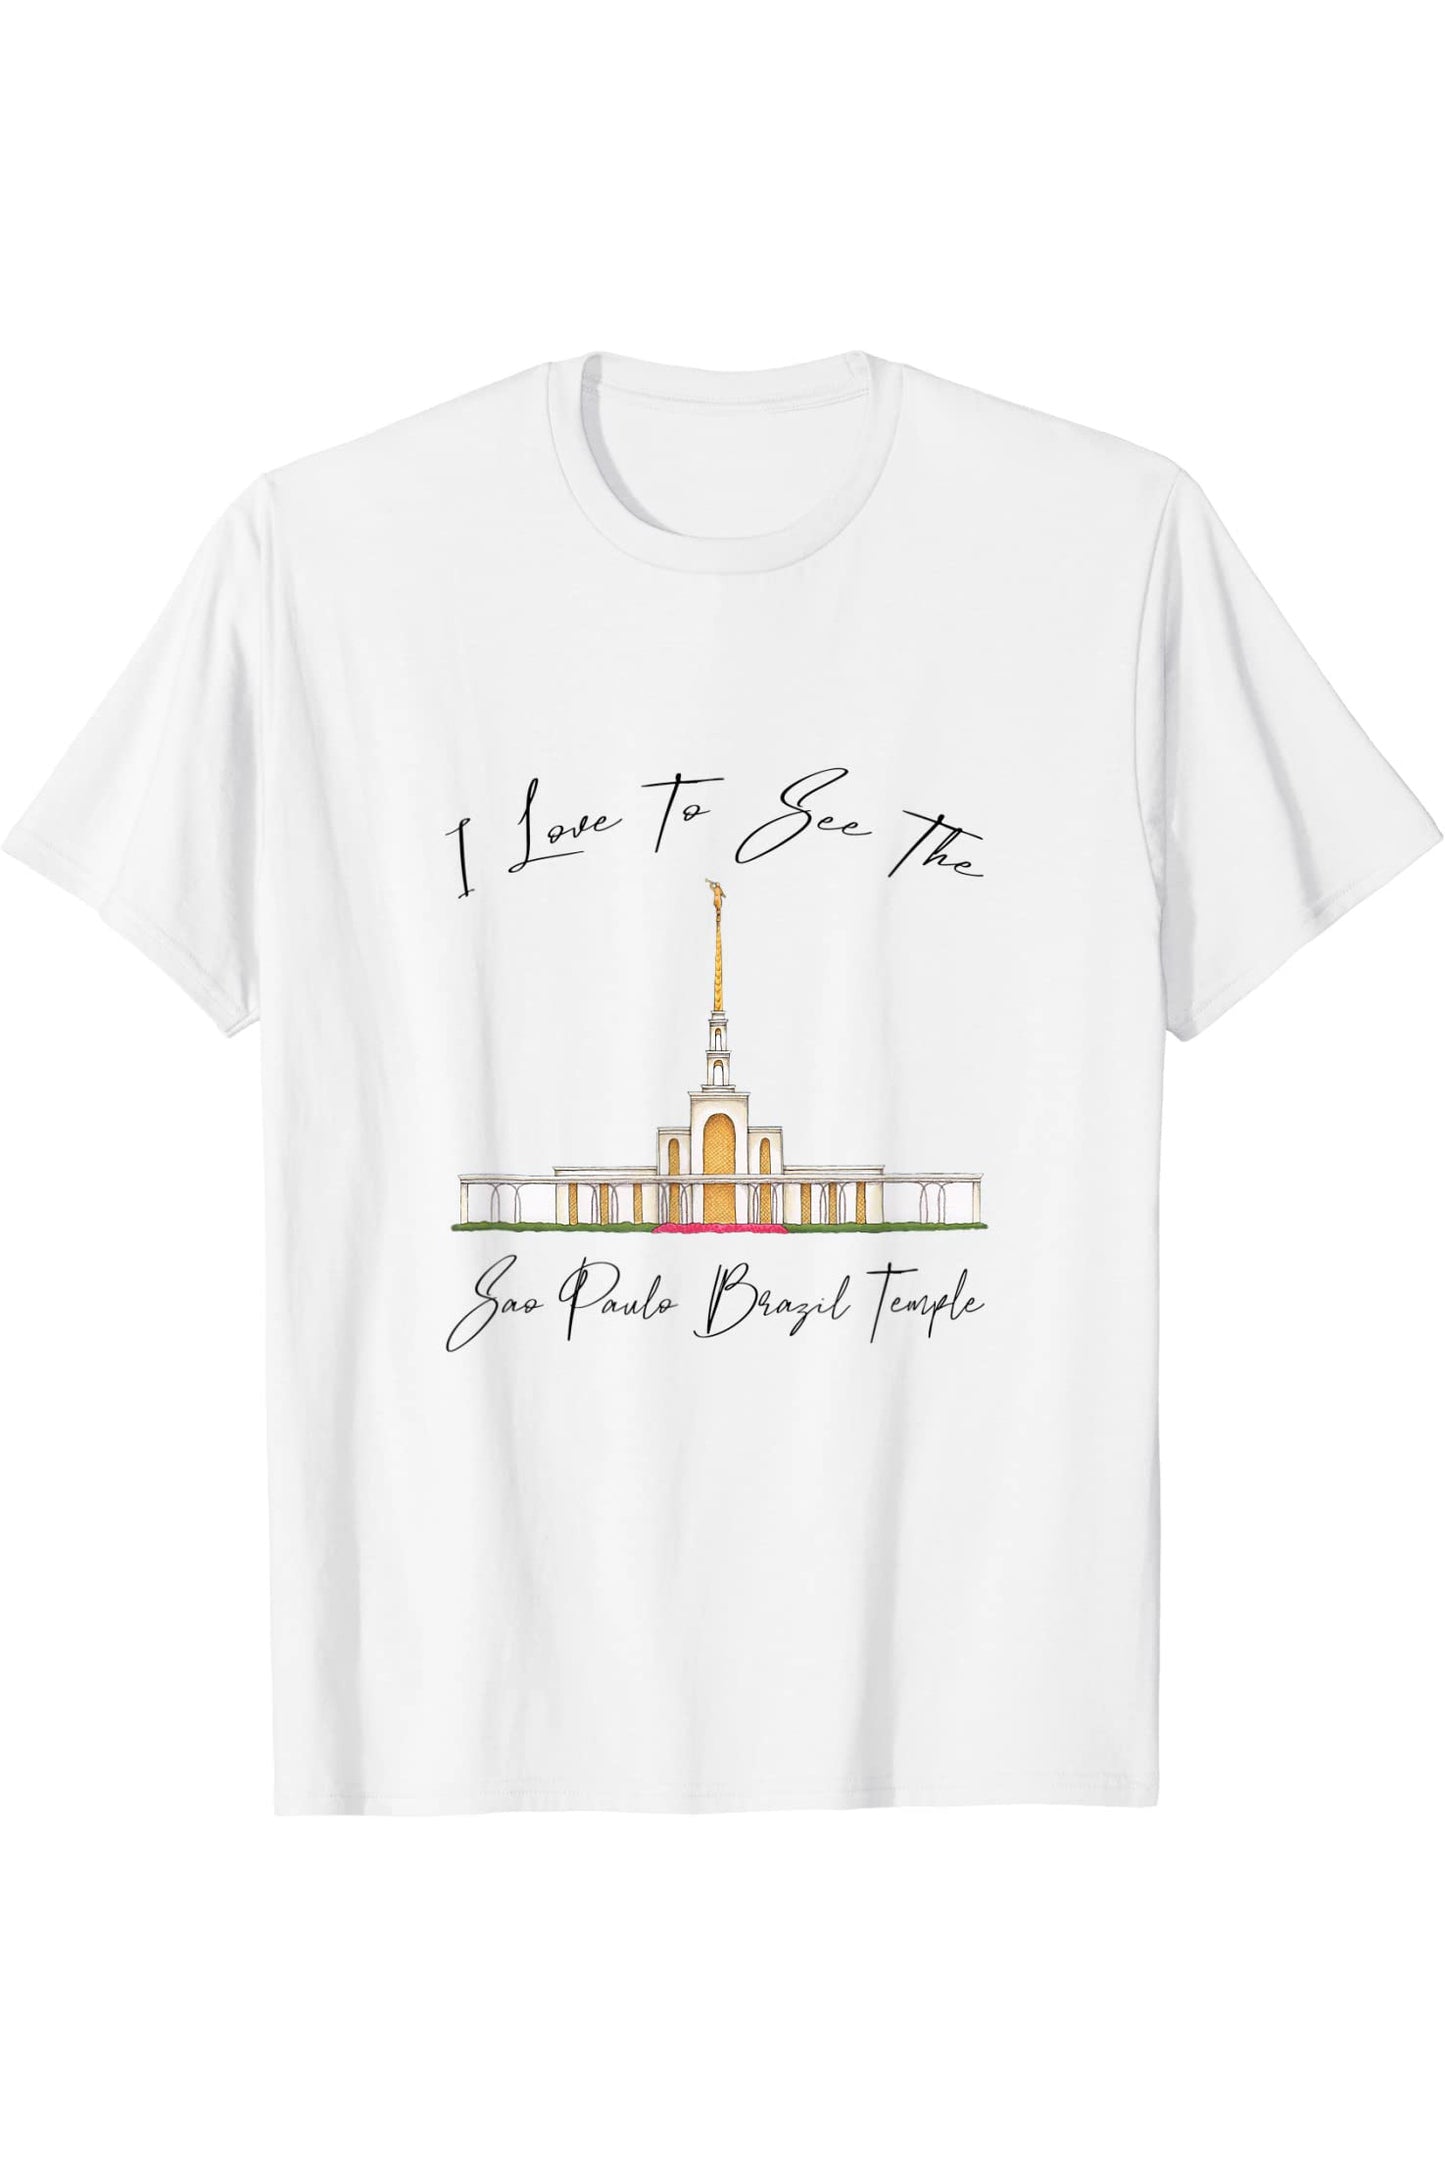 Sao Paulo Brazil Temple T-Shirt - Calligraphy Style (English) US